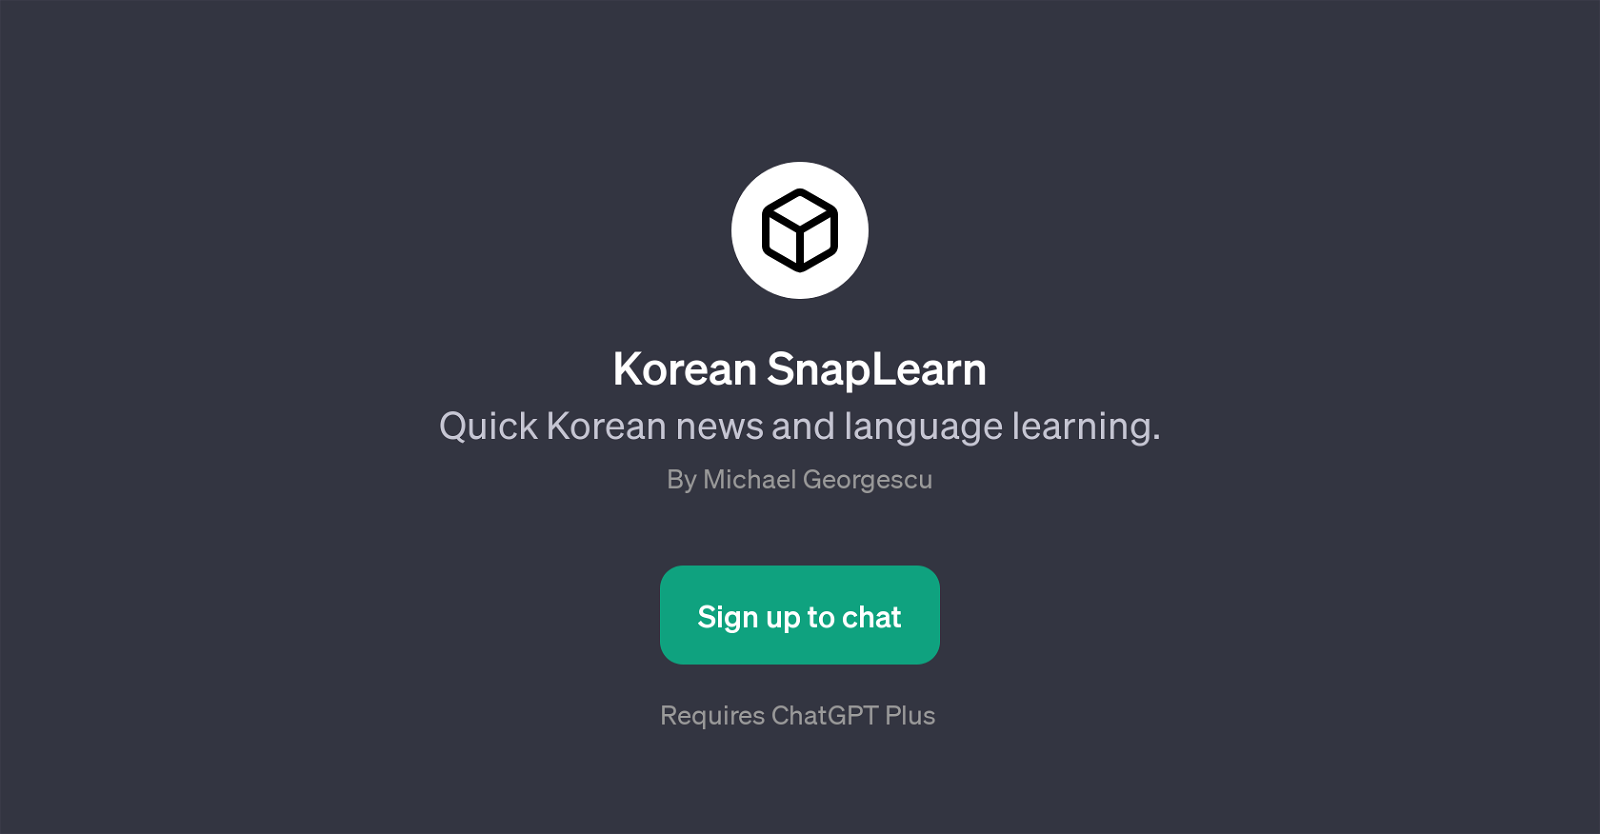 Korean SnapLearn website